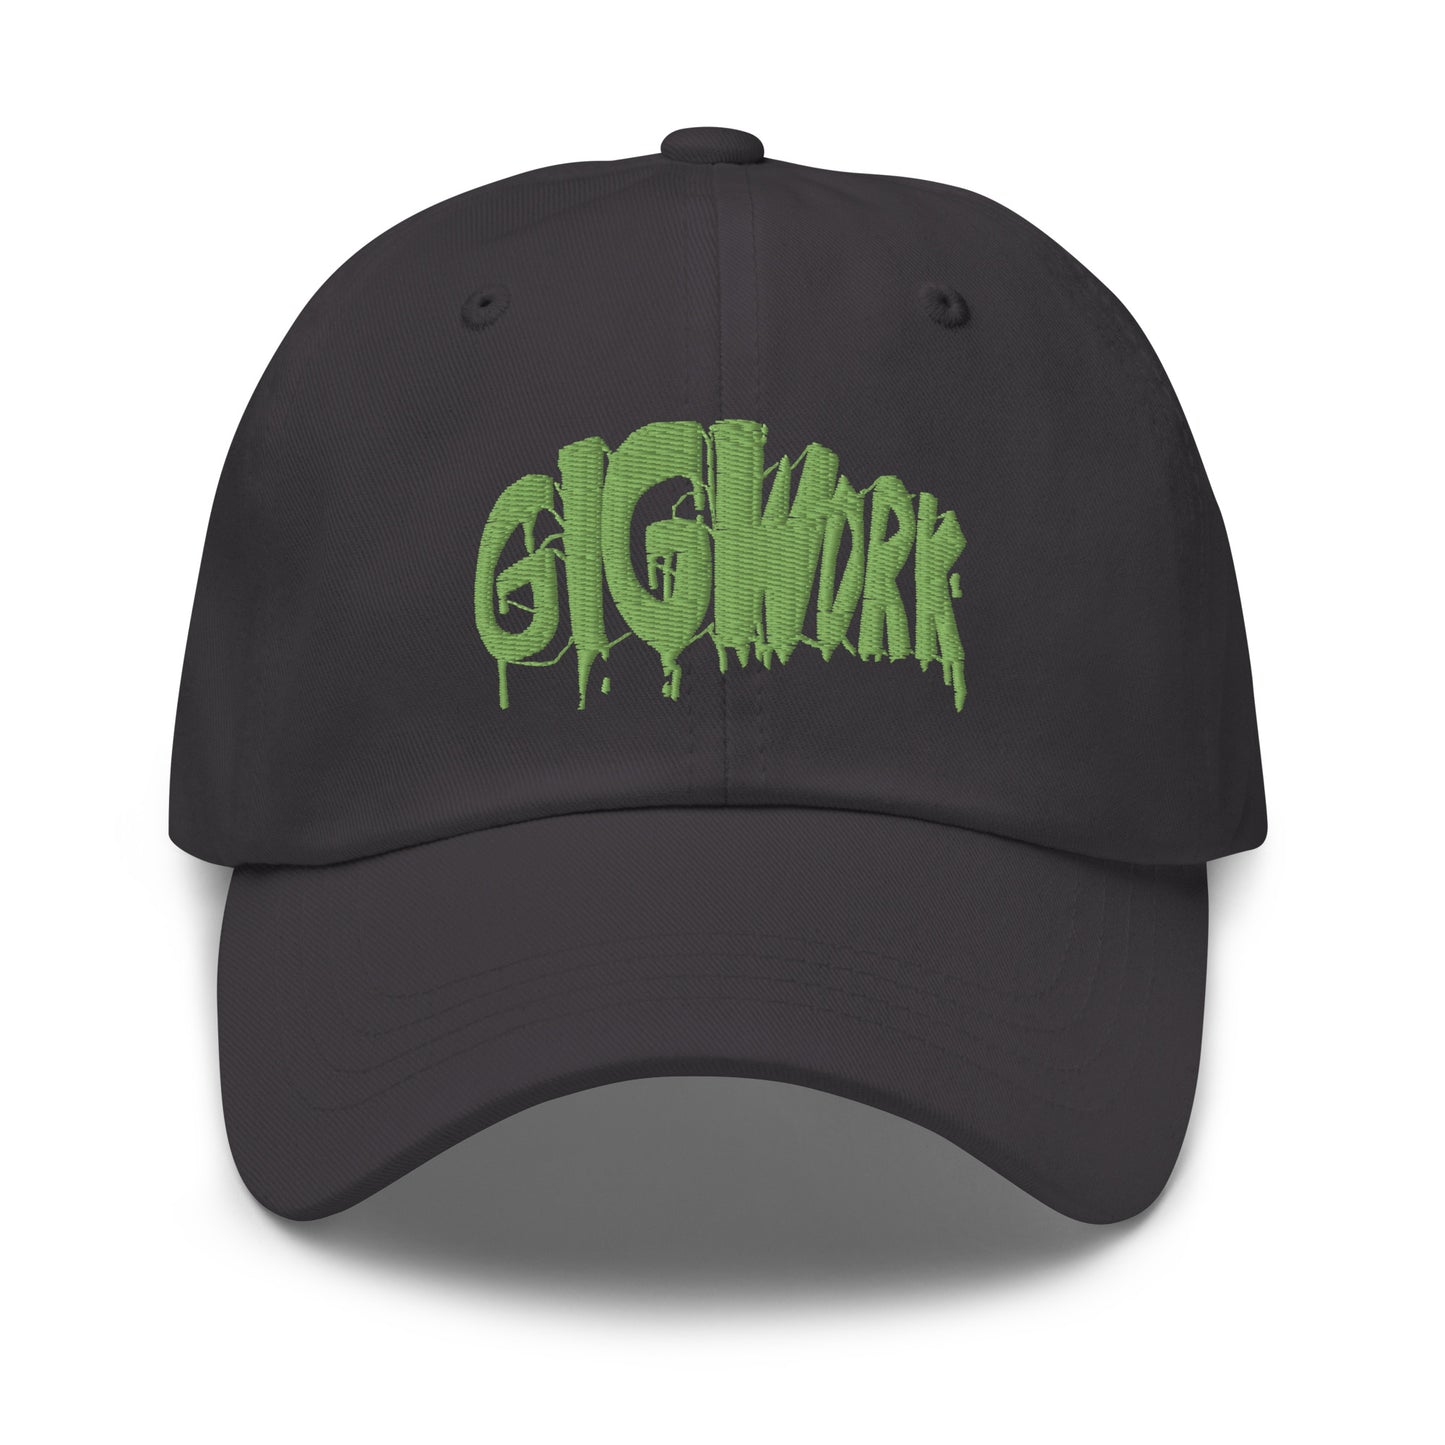 Gig Work dad hat